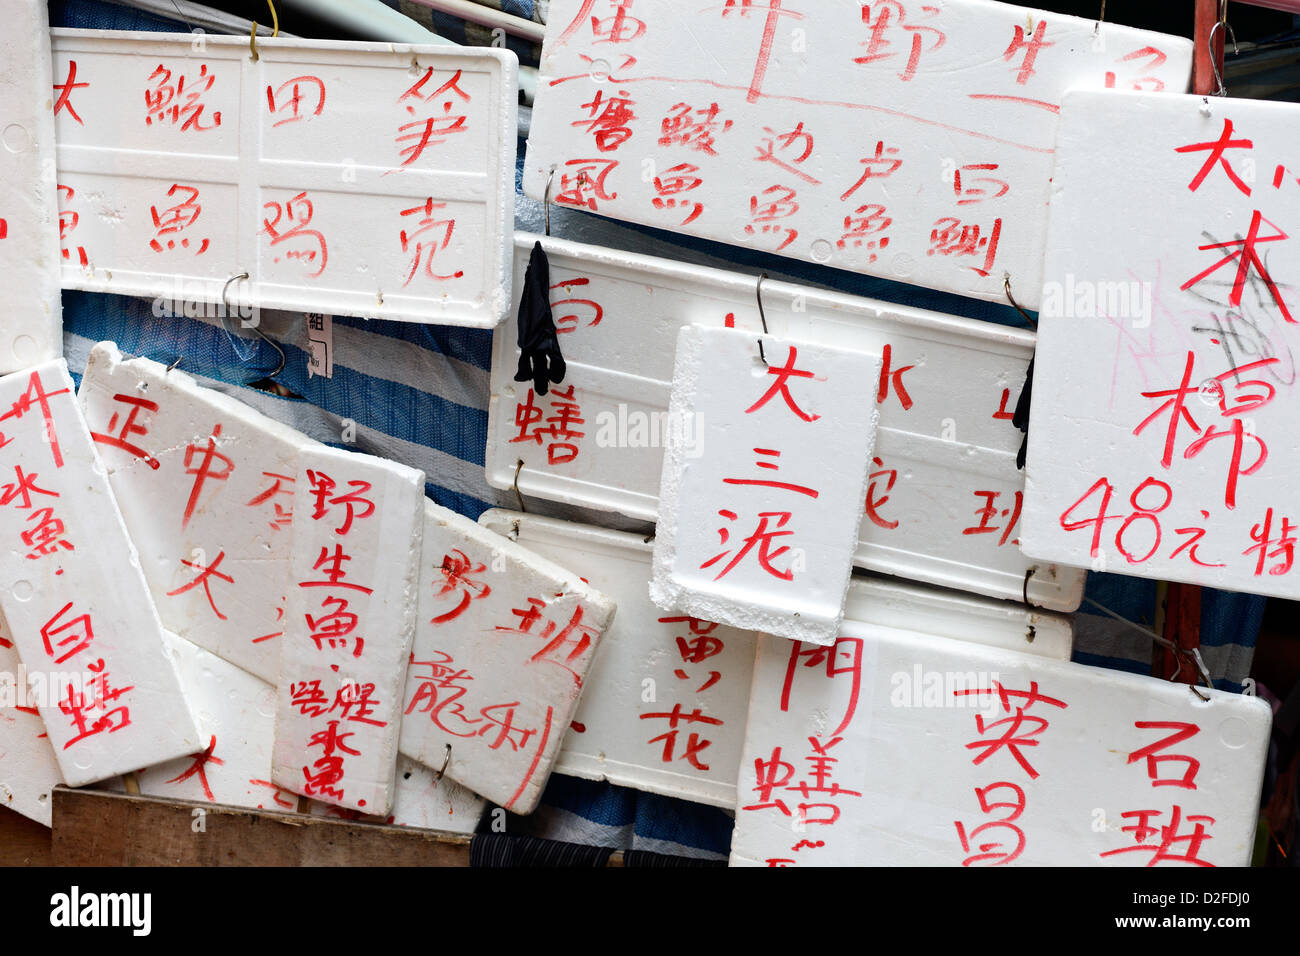 Hong Kong, Cina, i caratteri cinesi scritti su piastre in polistirolo espanso Foto Stock